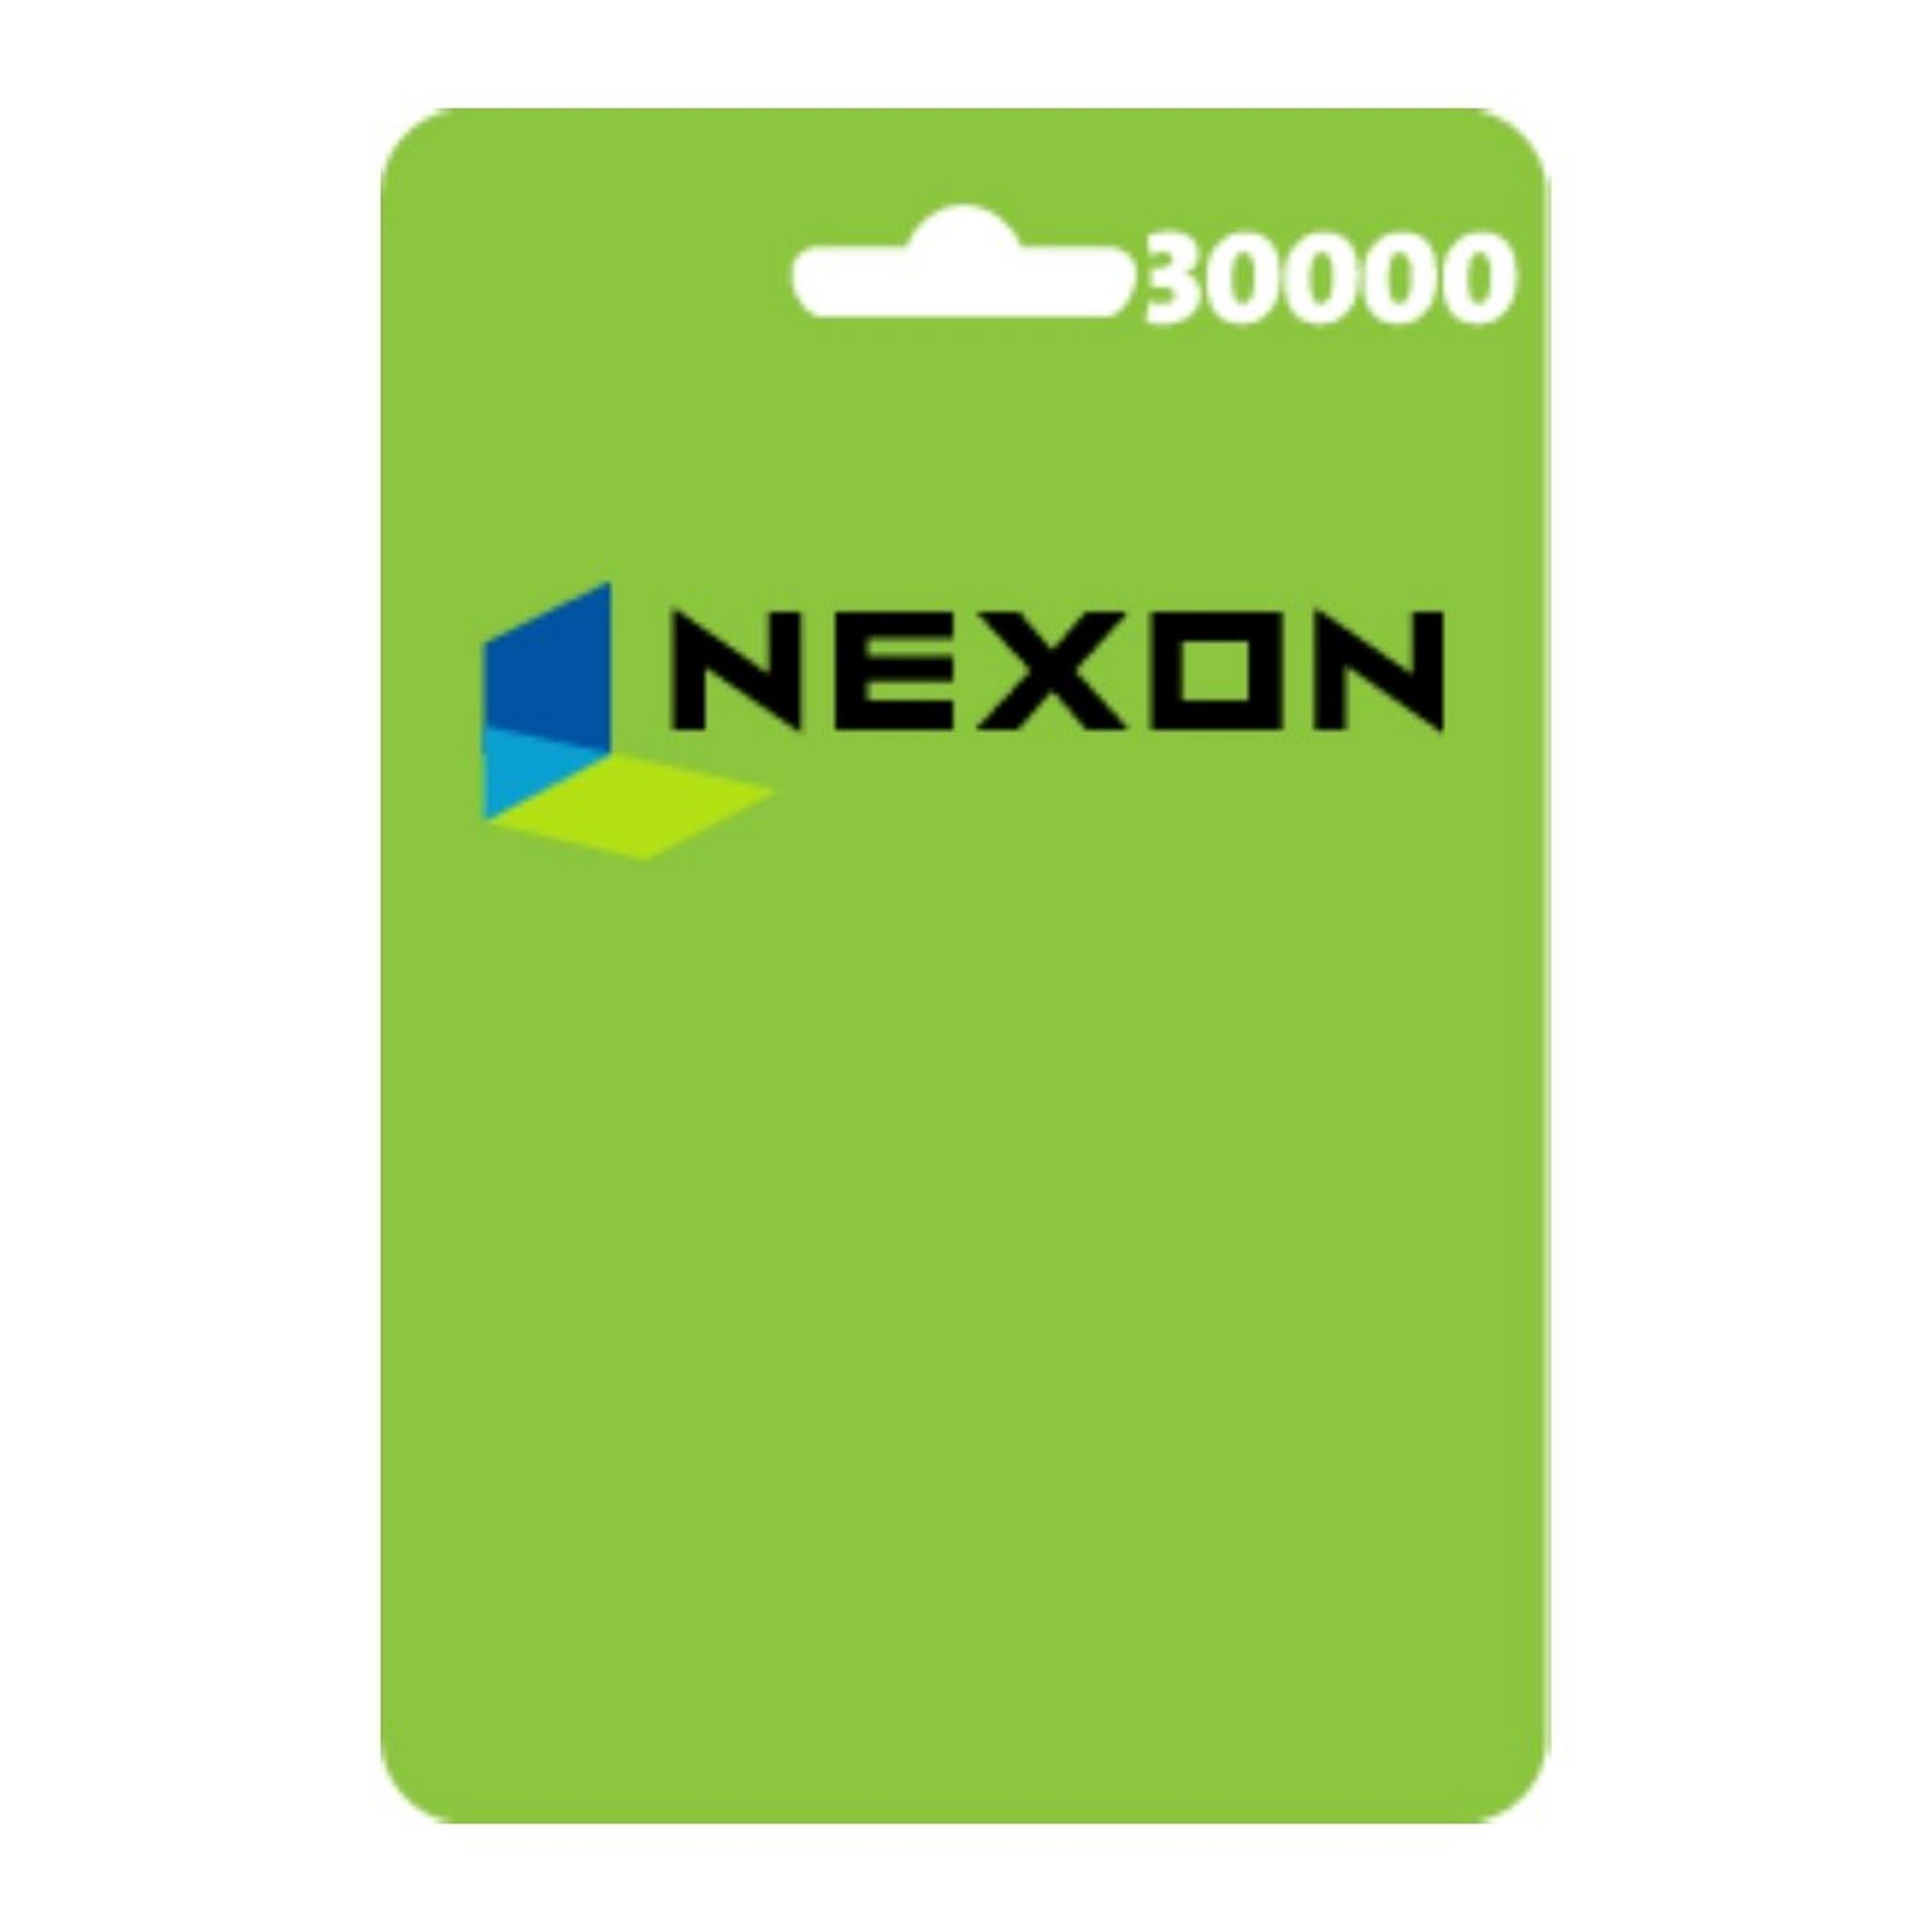 Nexon Eu Card - 30000 Cash